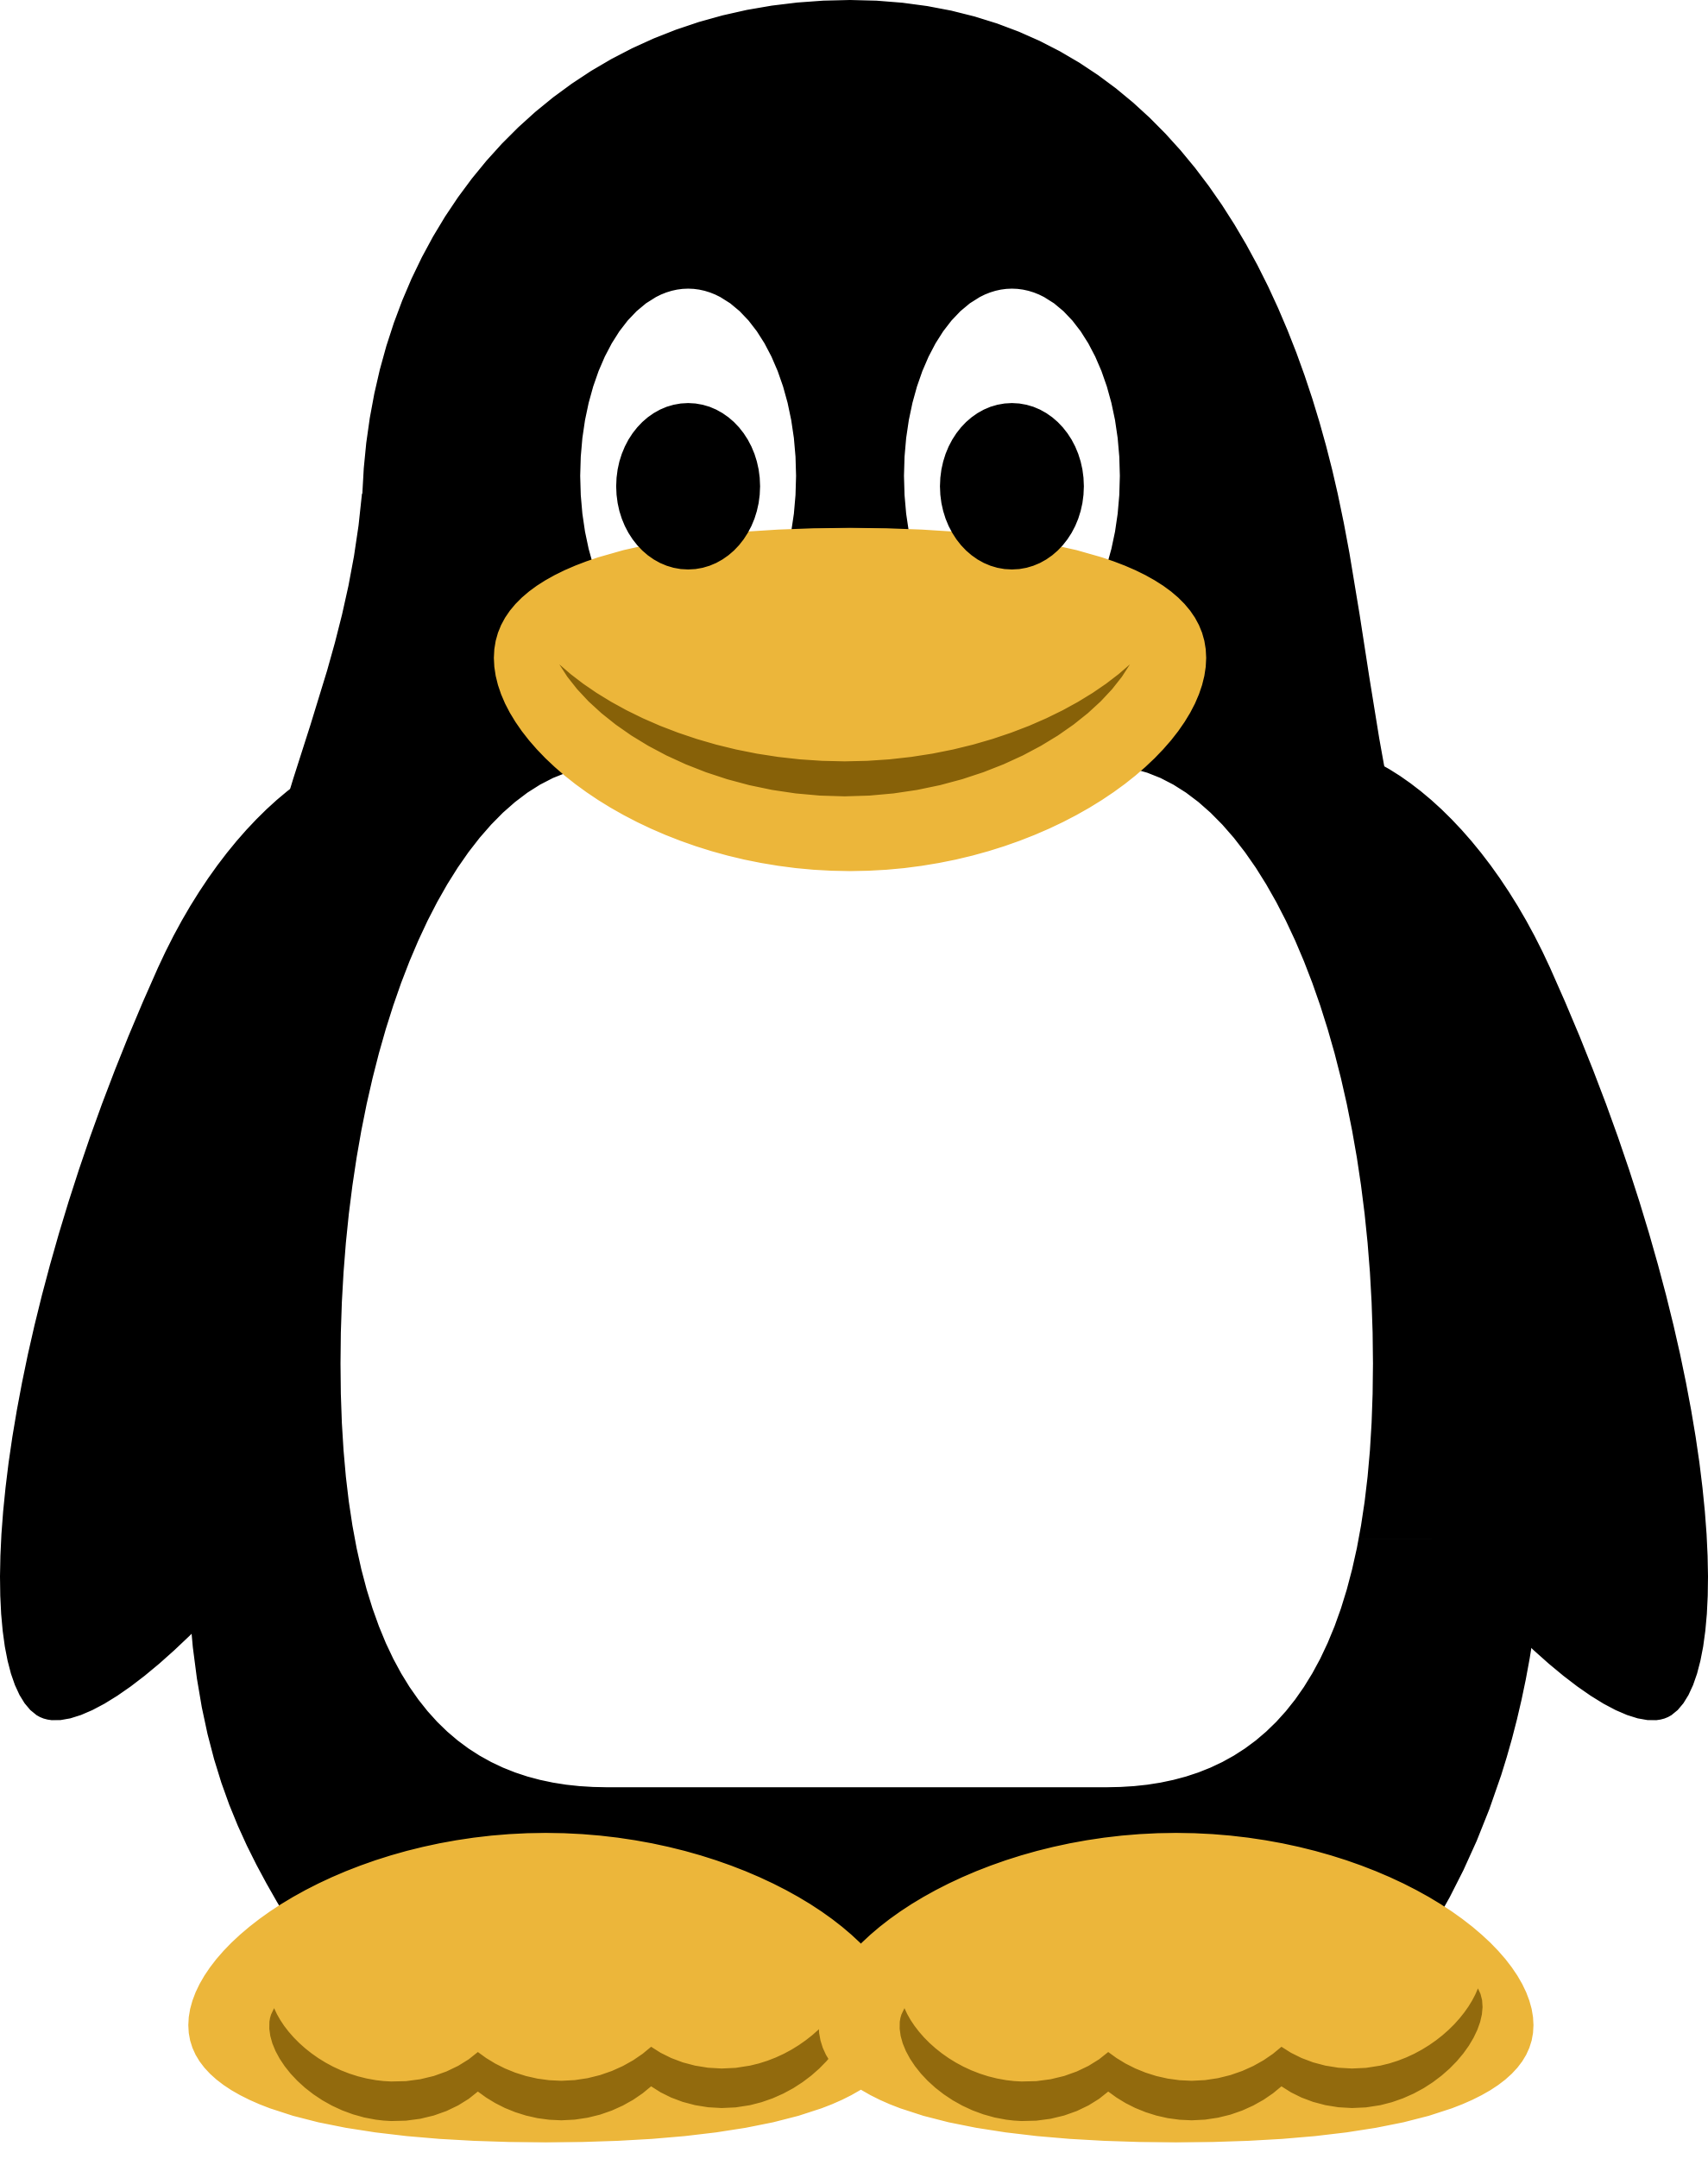 Christmas Penguin Clipart Black And White | Clipart Panda - Free ...